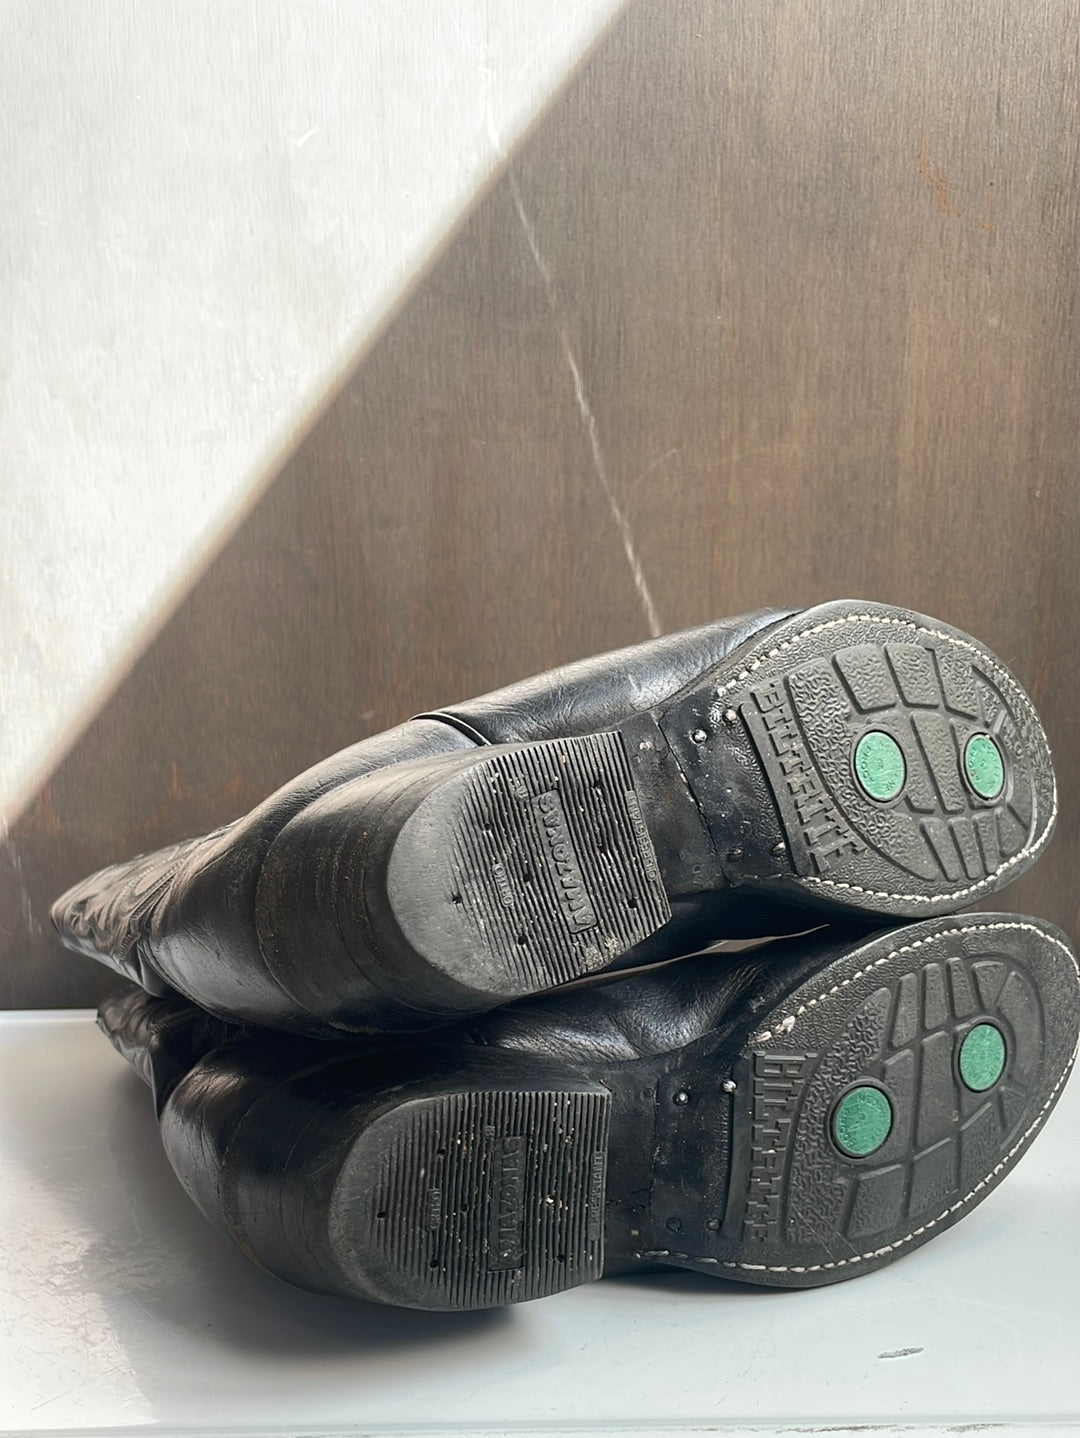 Tony Lama Black Leather boots